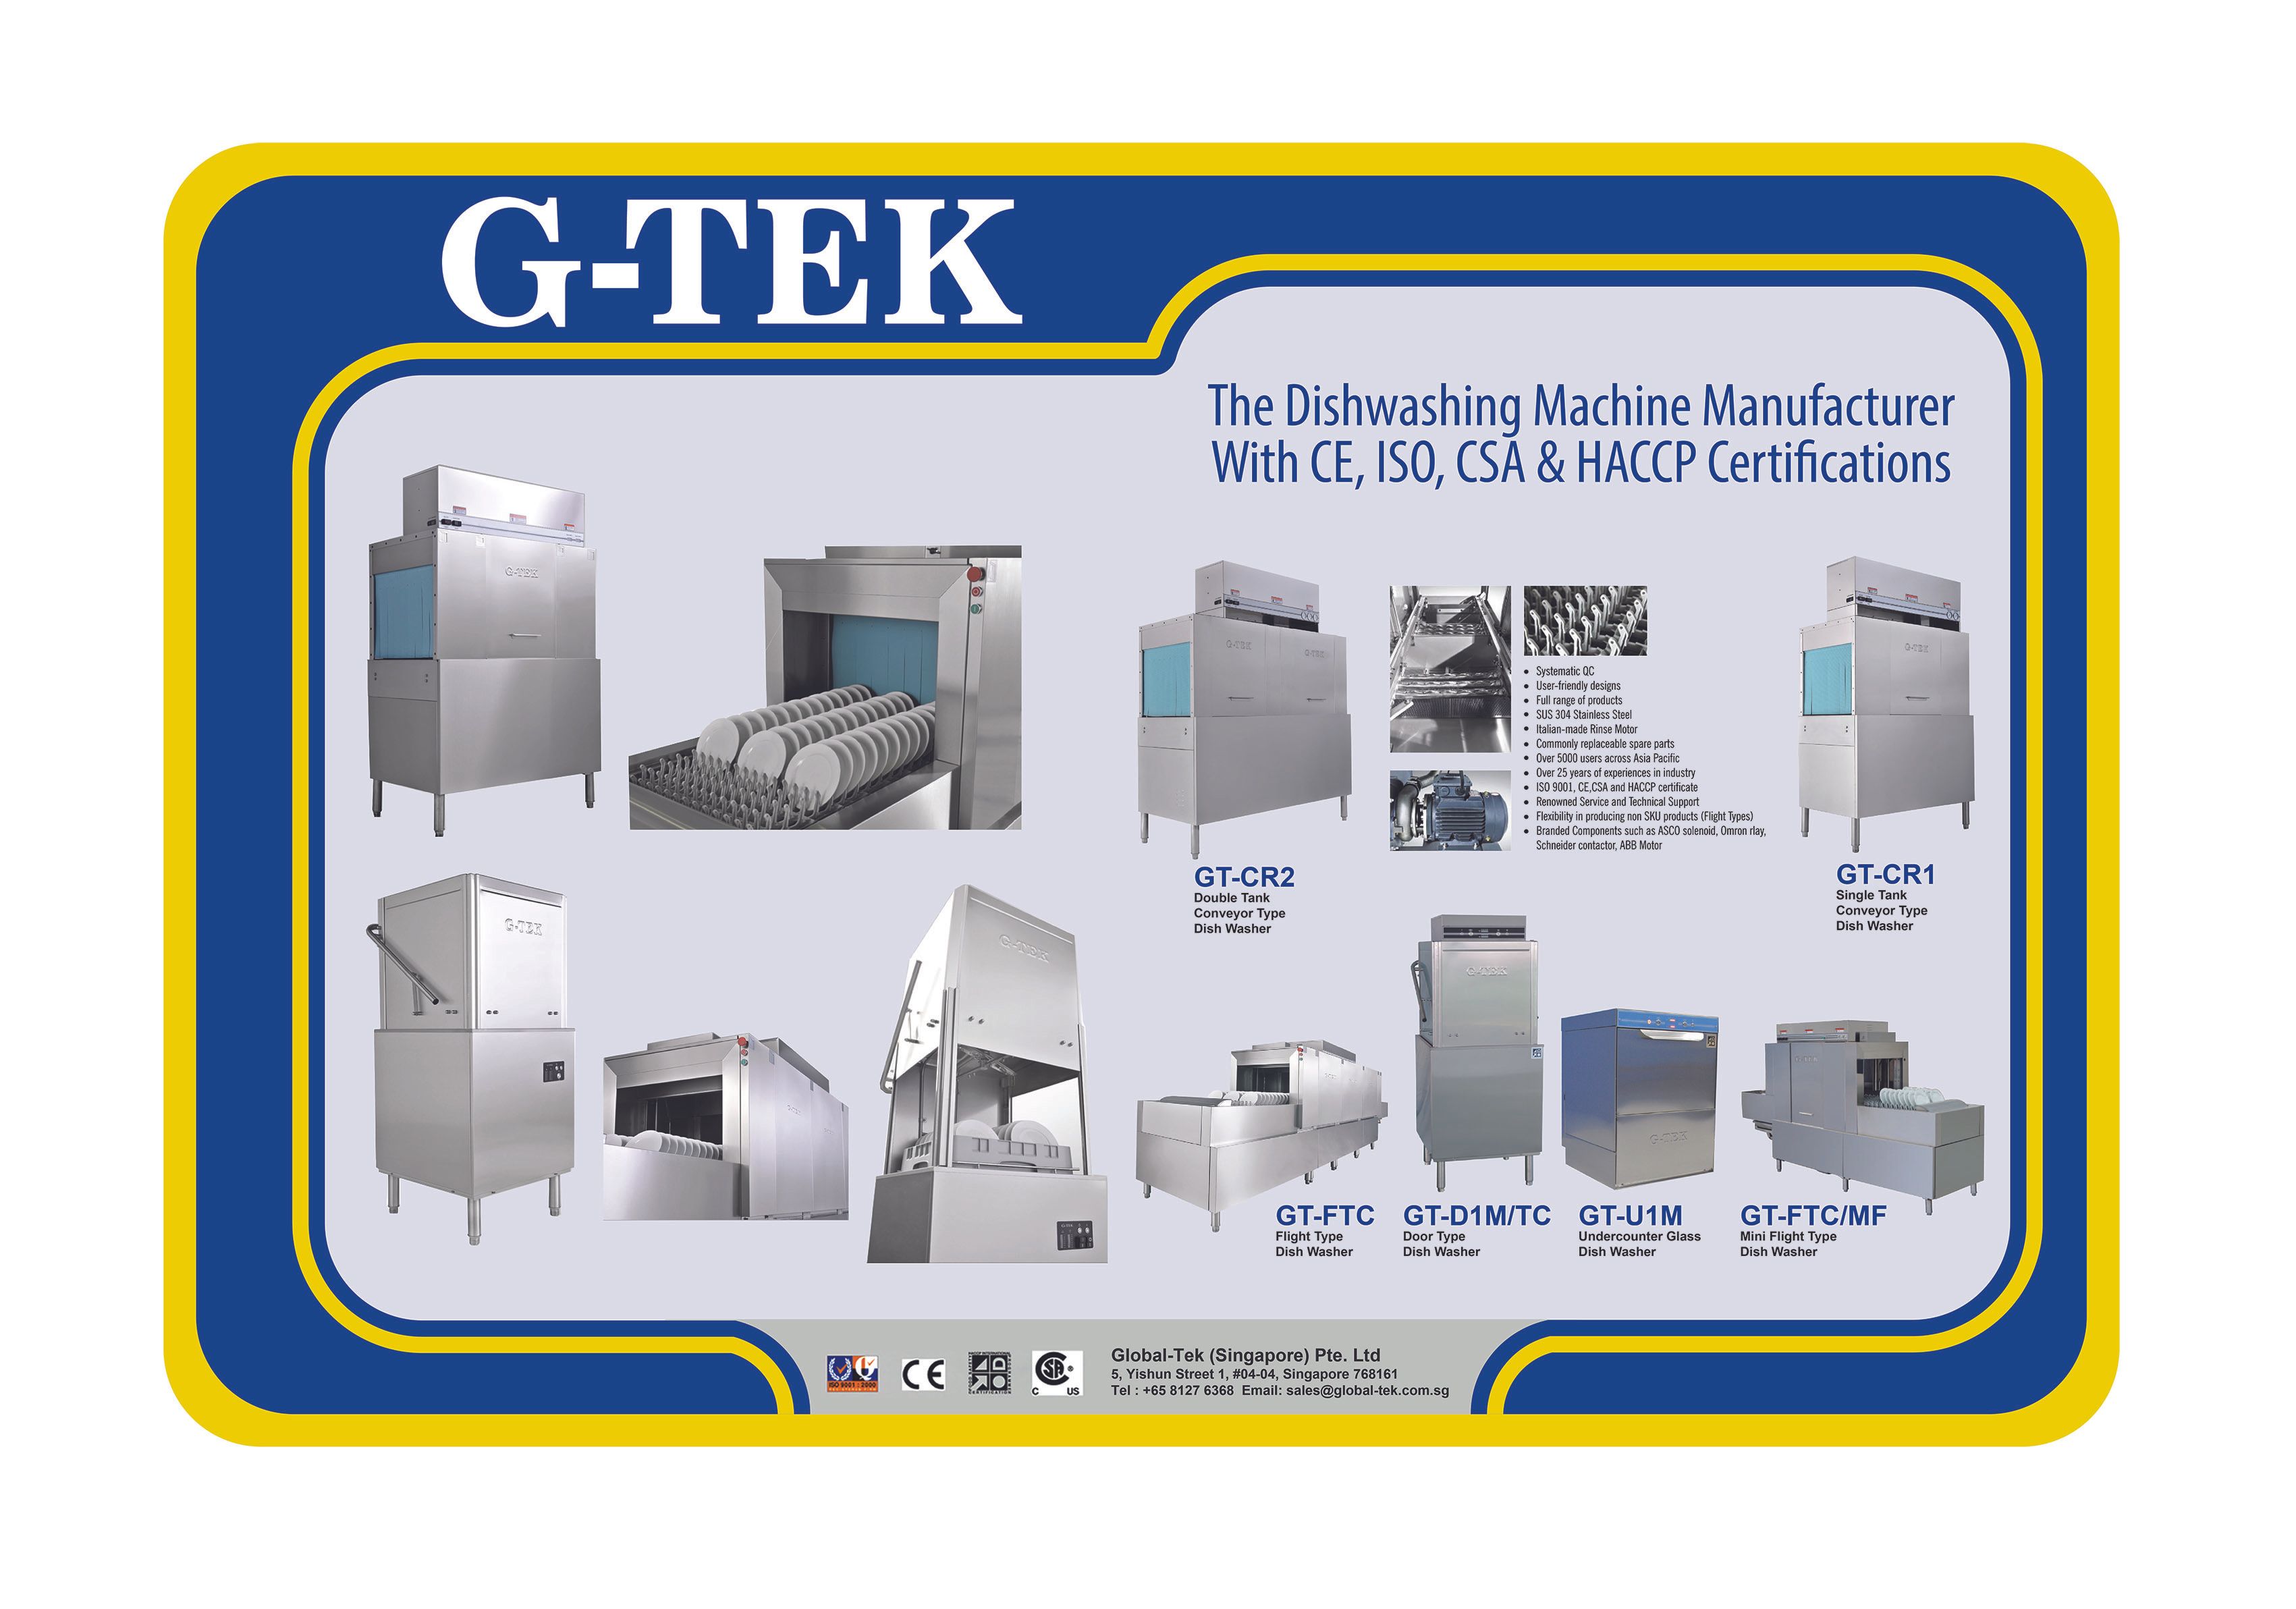 Global-Tek Machinery Pte Ltd.